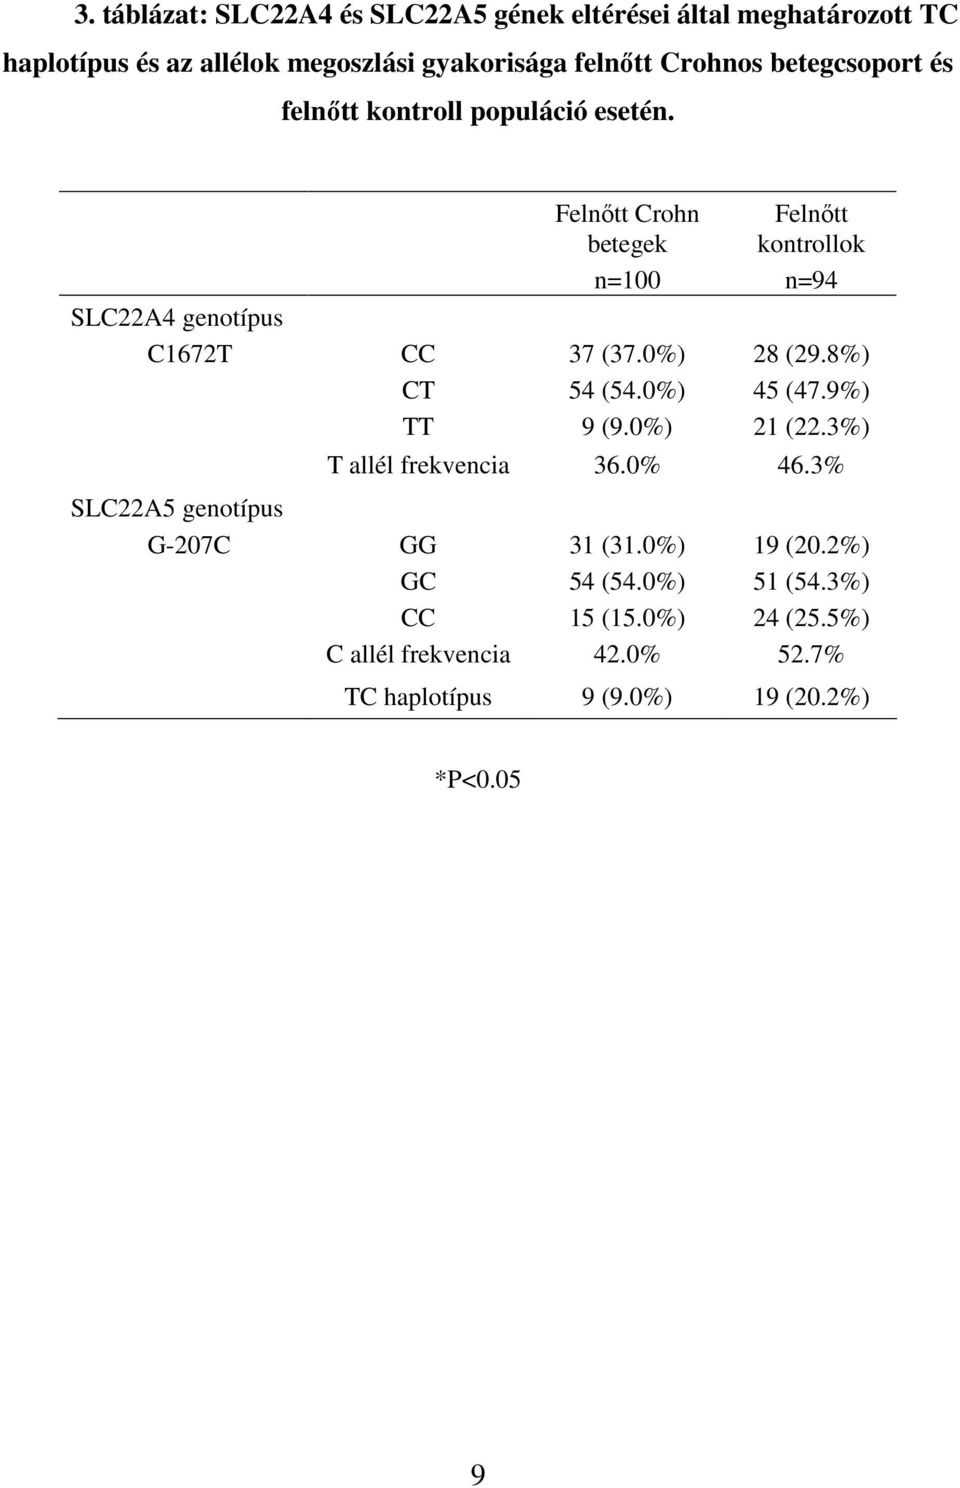 SLC22A4 genotípus C1672T SLC22A5 genotípus G-207C CT TT Felnıtt Crohn betegek n=100 37 (37.0%) 54 (54.0%) 9 (9.